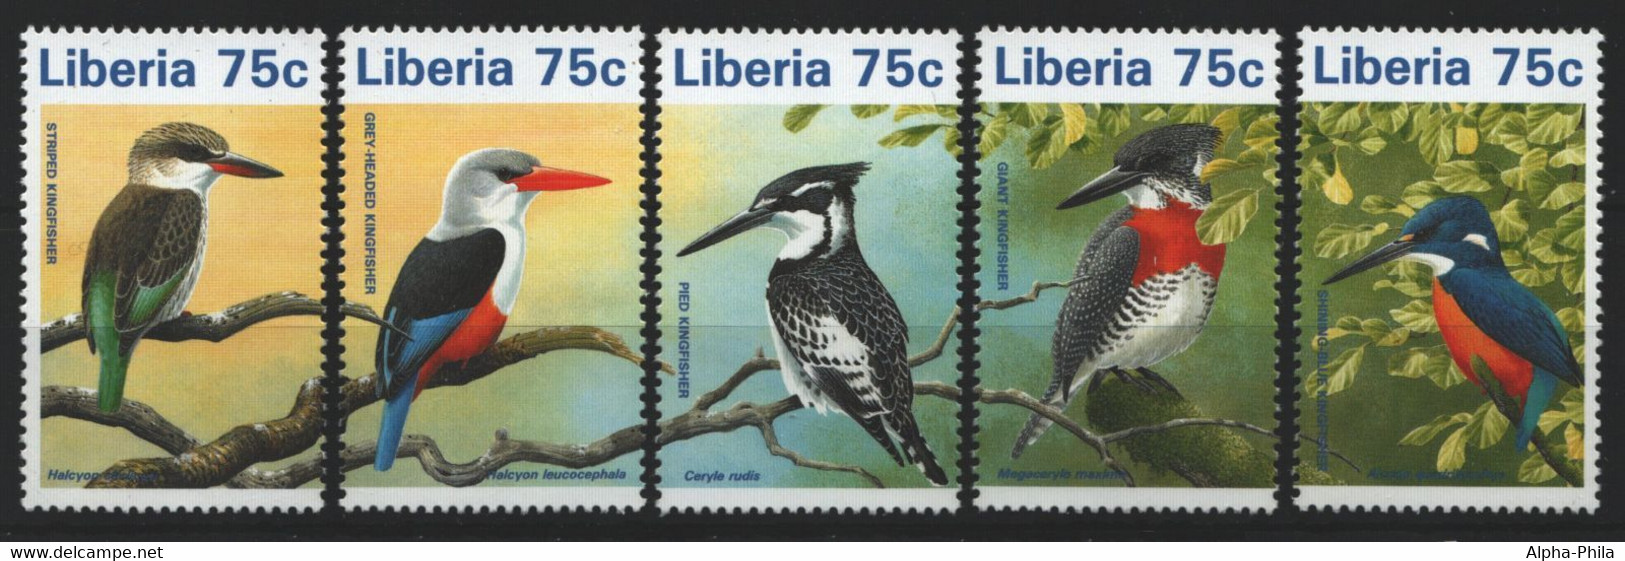 Liberia 1996 - Mi-Nr. 1796-1800 ** - MNH - Einzeln - Vögel / Birds - Liberia